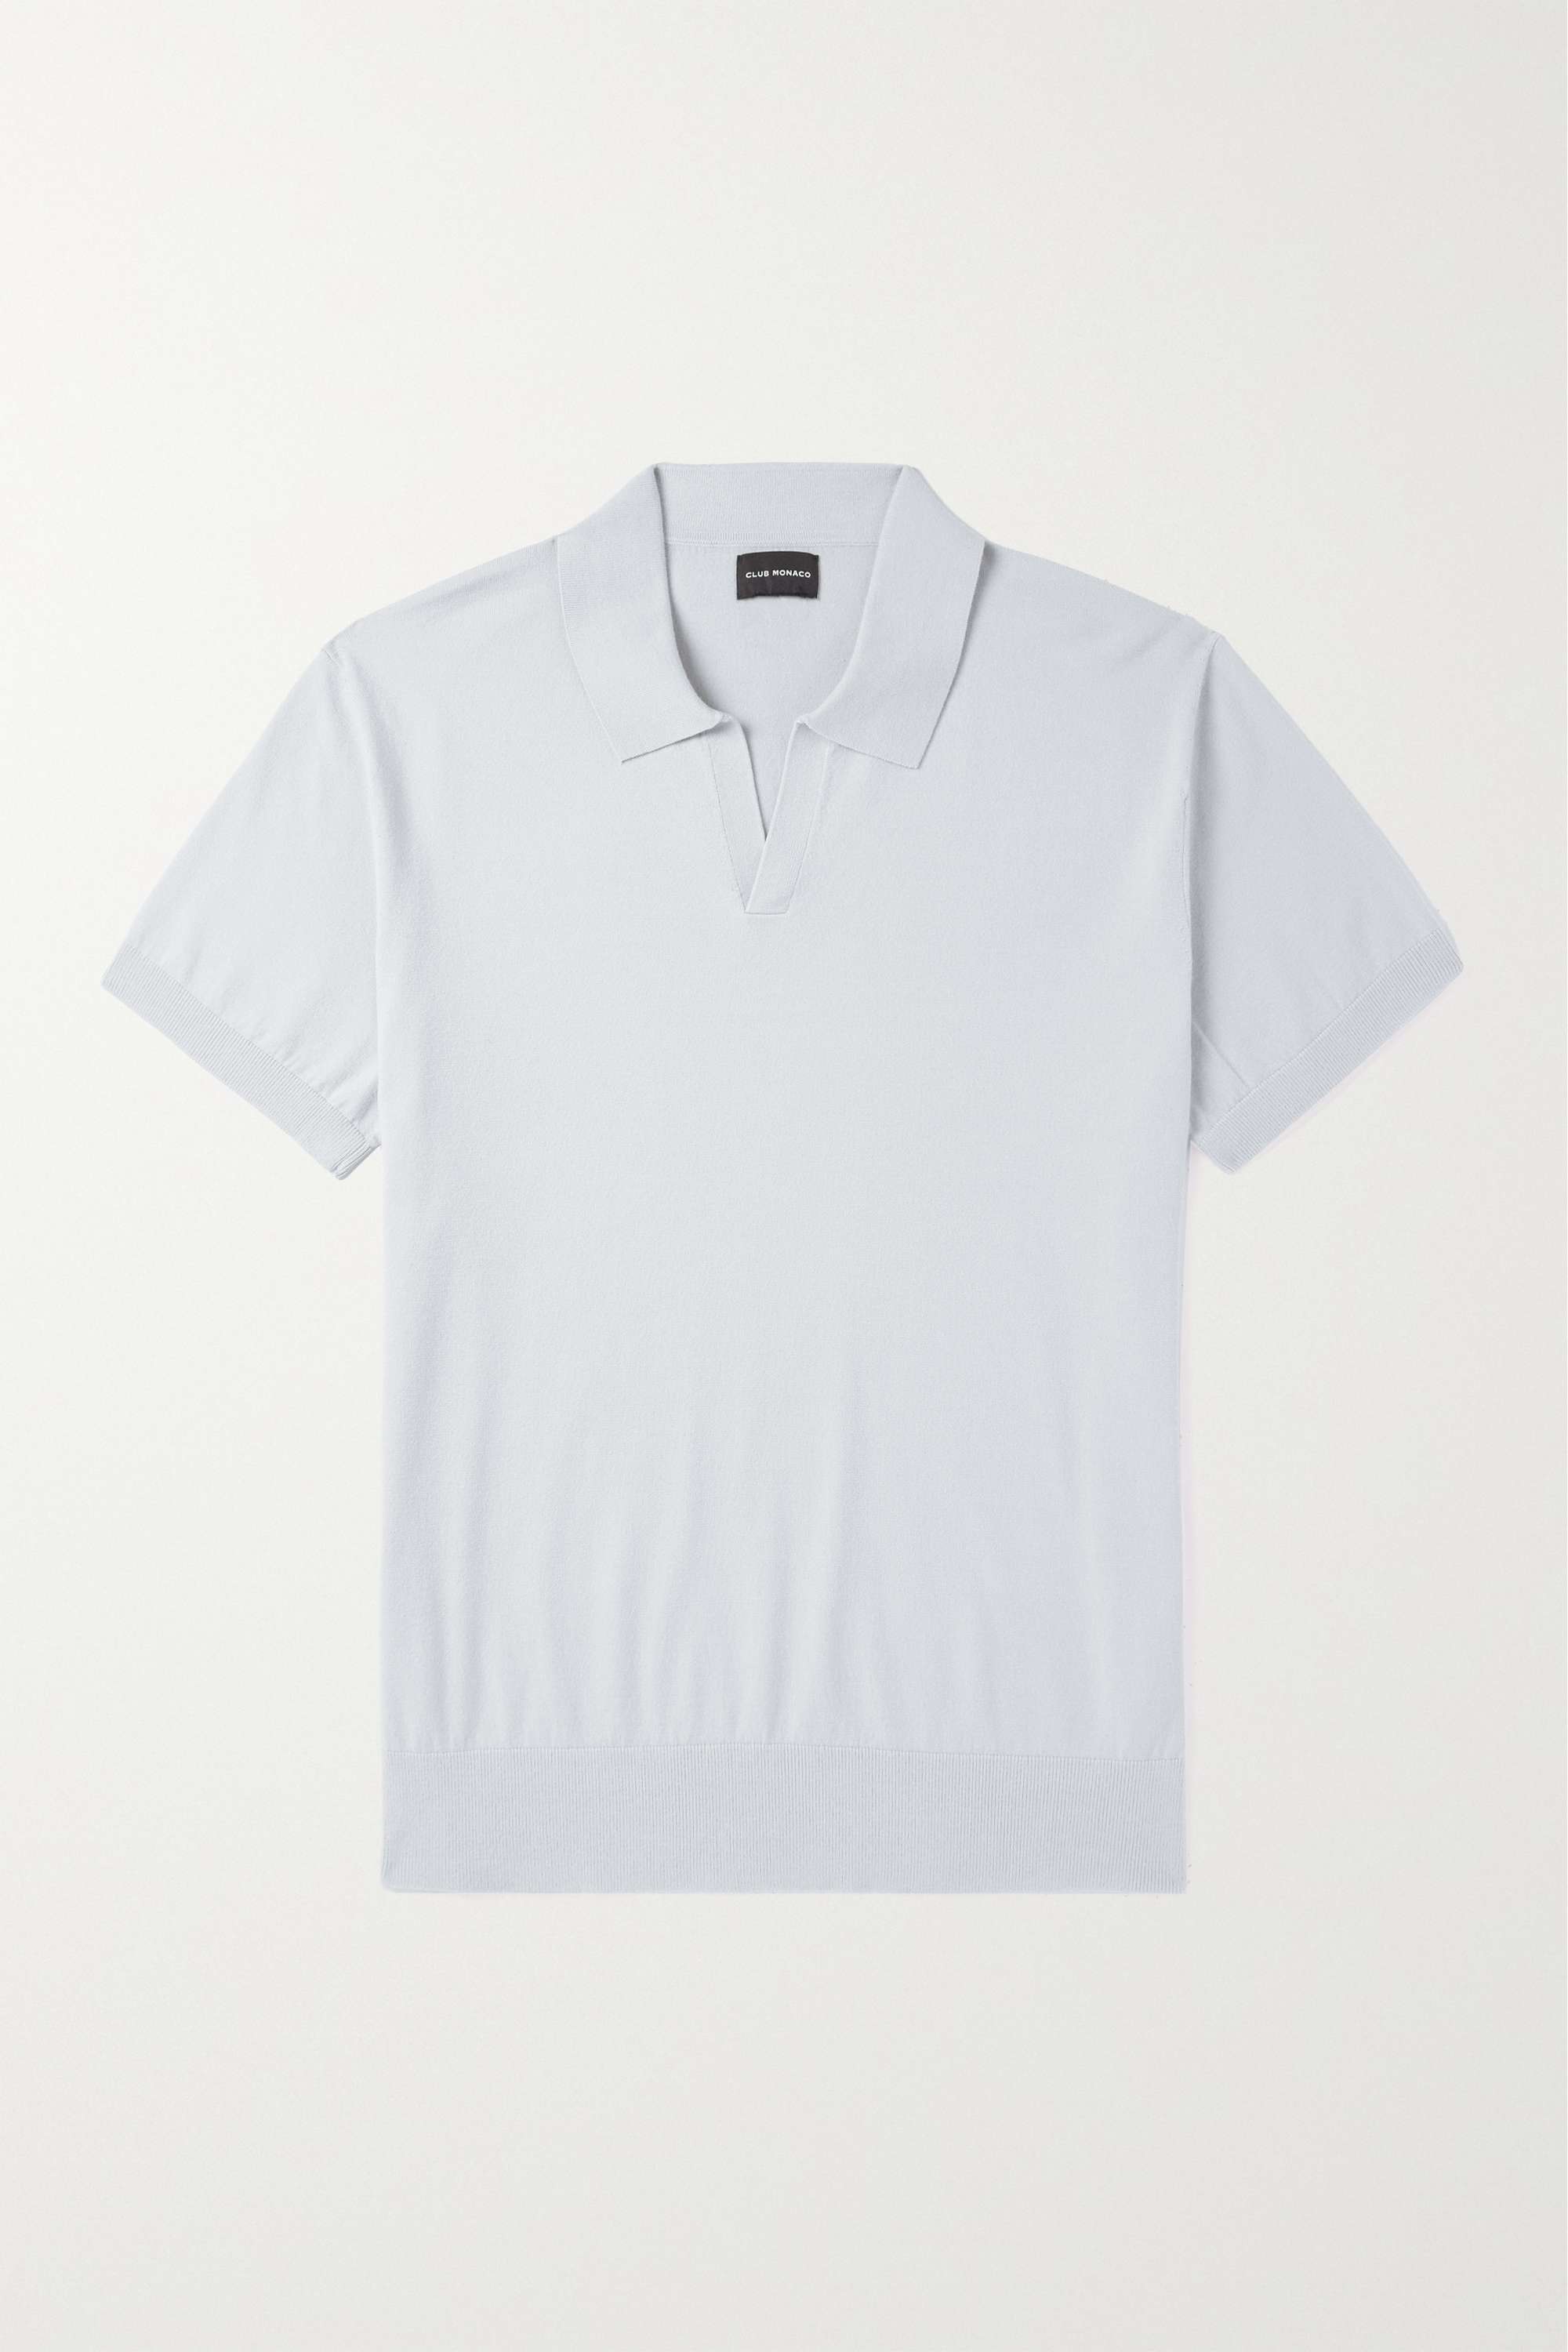 CLUB MONACO Johnny ECOVERO™-Blend Polo Shirt for Men | MR PORTER